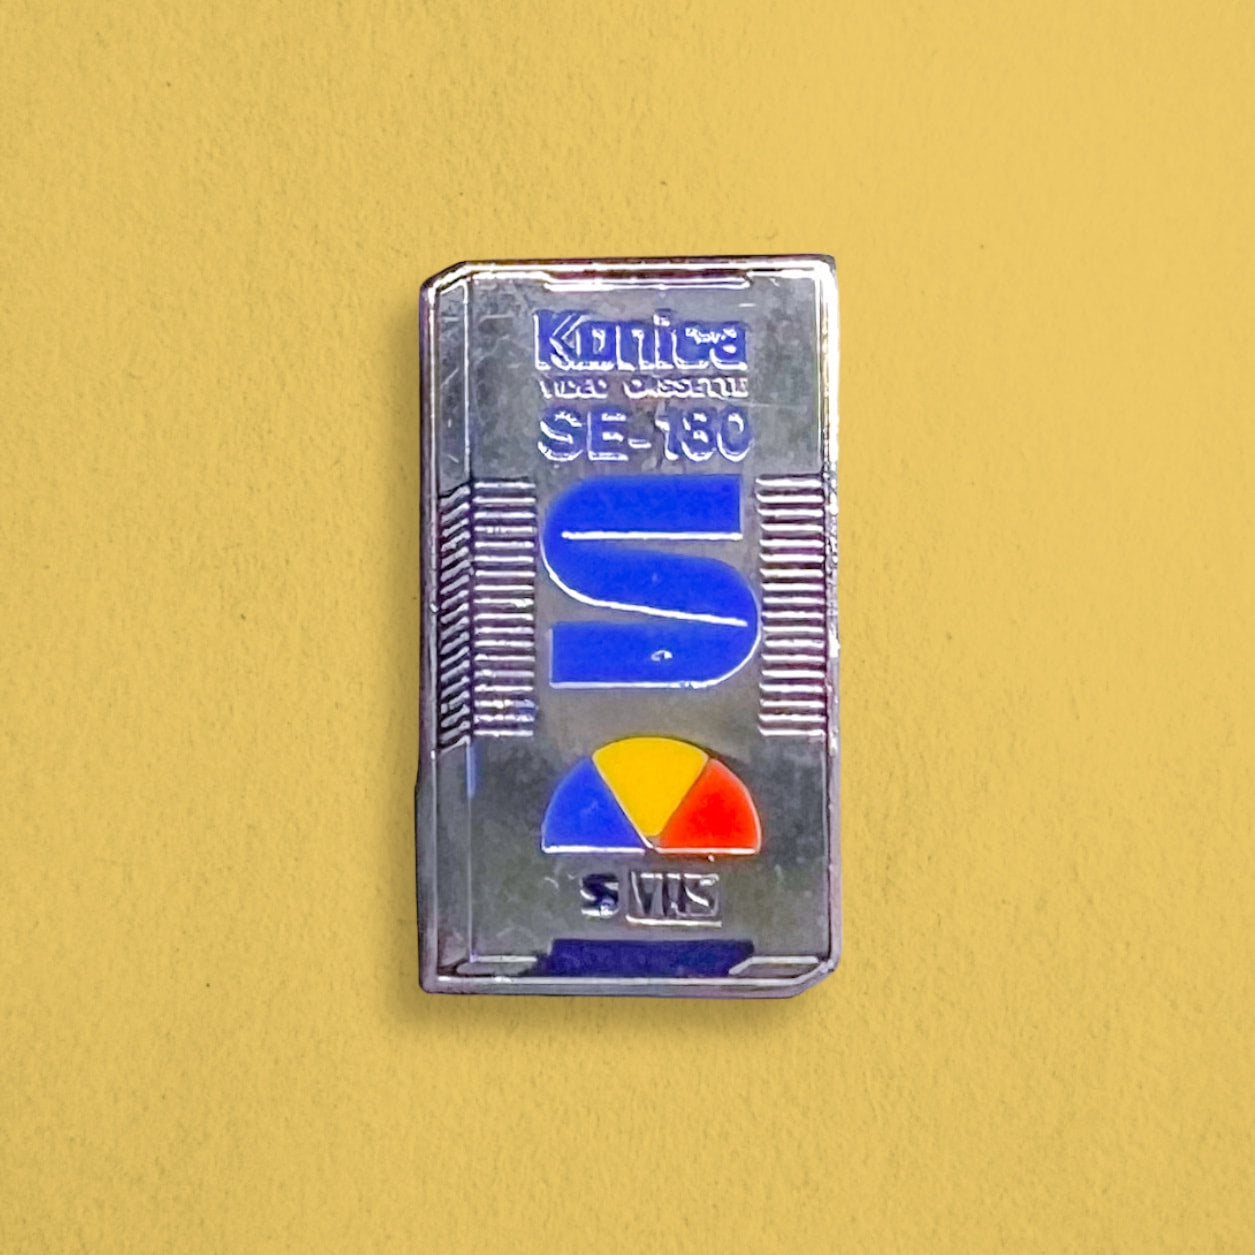 Vintage 1990s VHS Cassette Enamel Pin